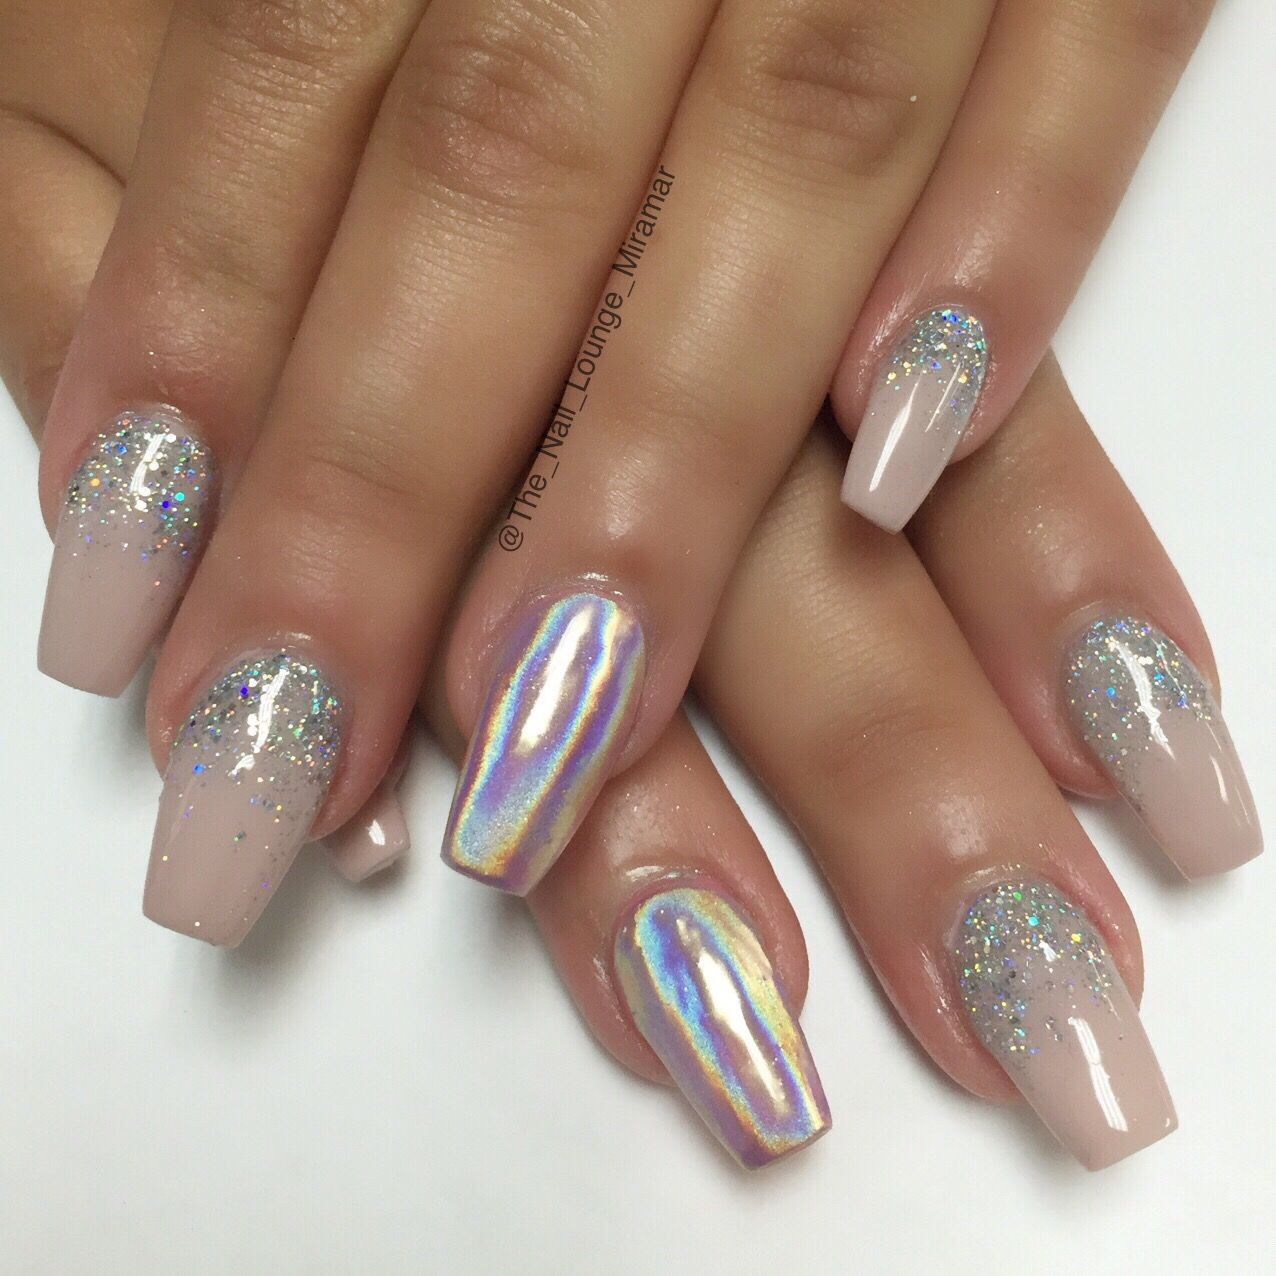 Chrome Glitter Nails
 Holographic chrome glitter ombré nail art design